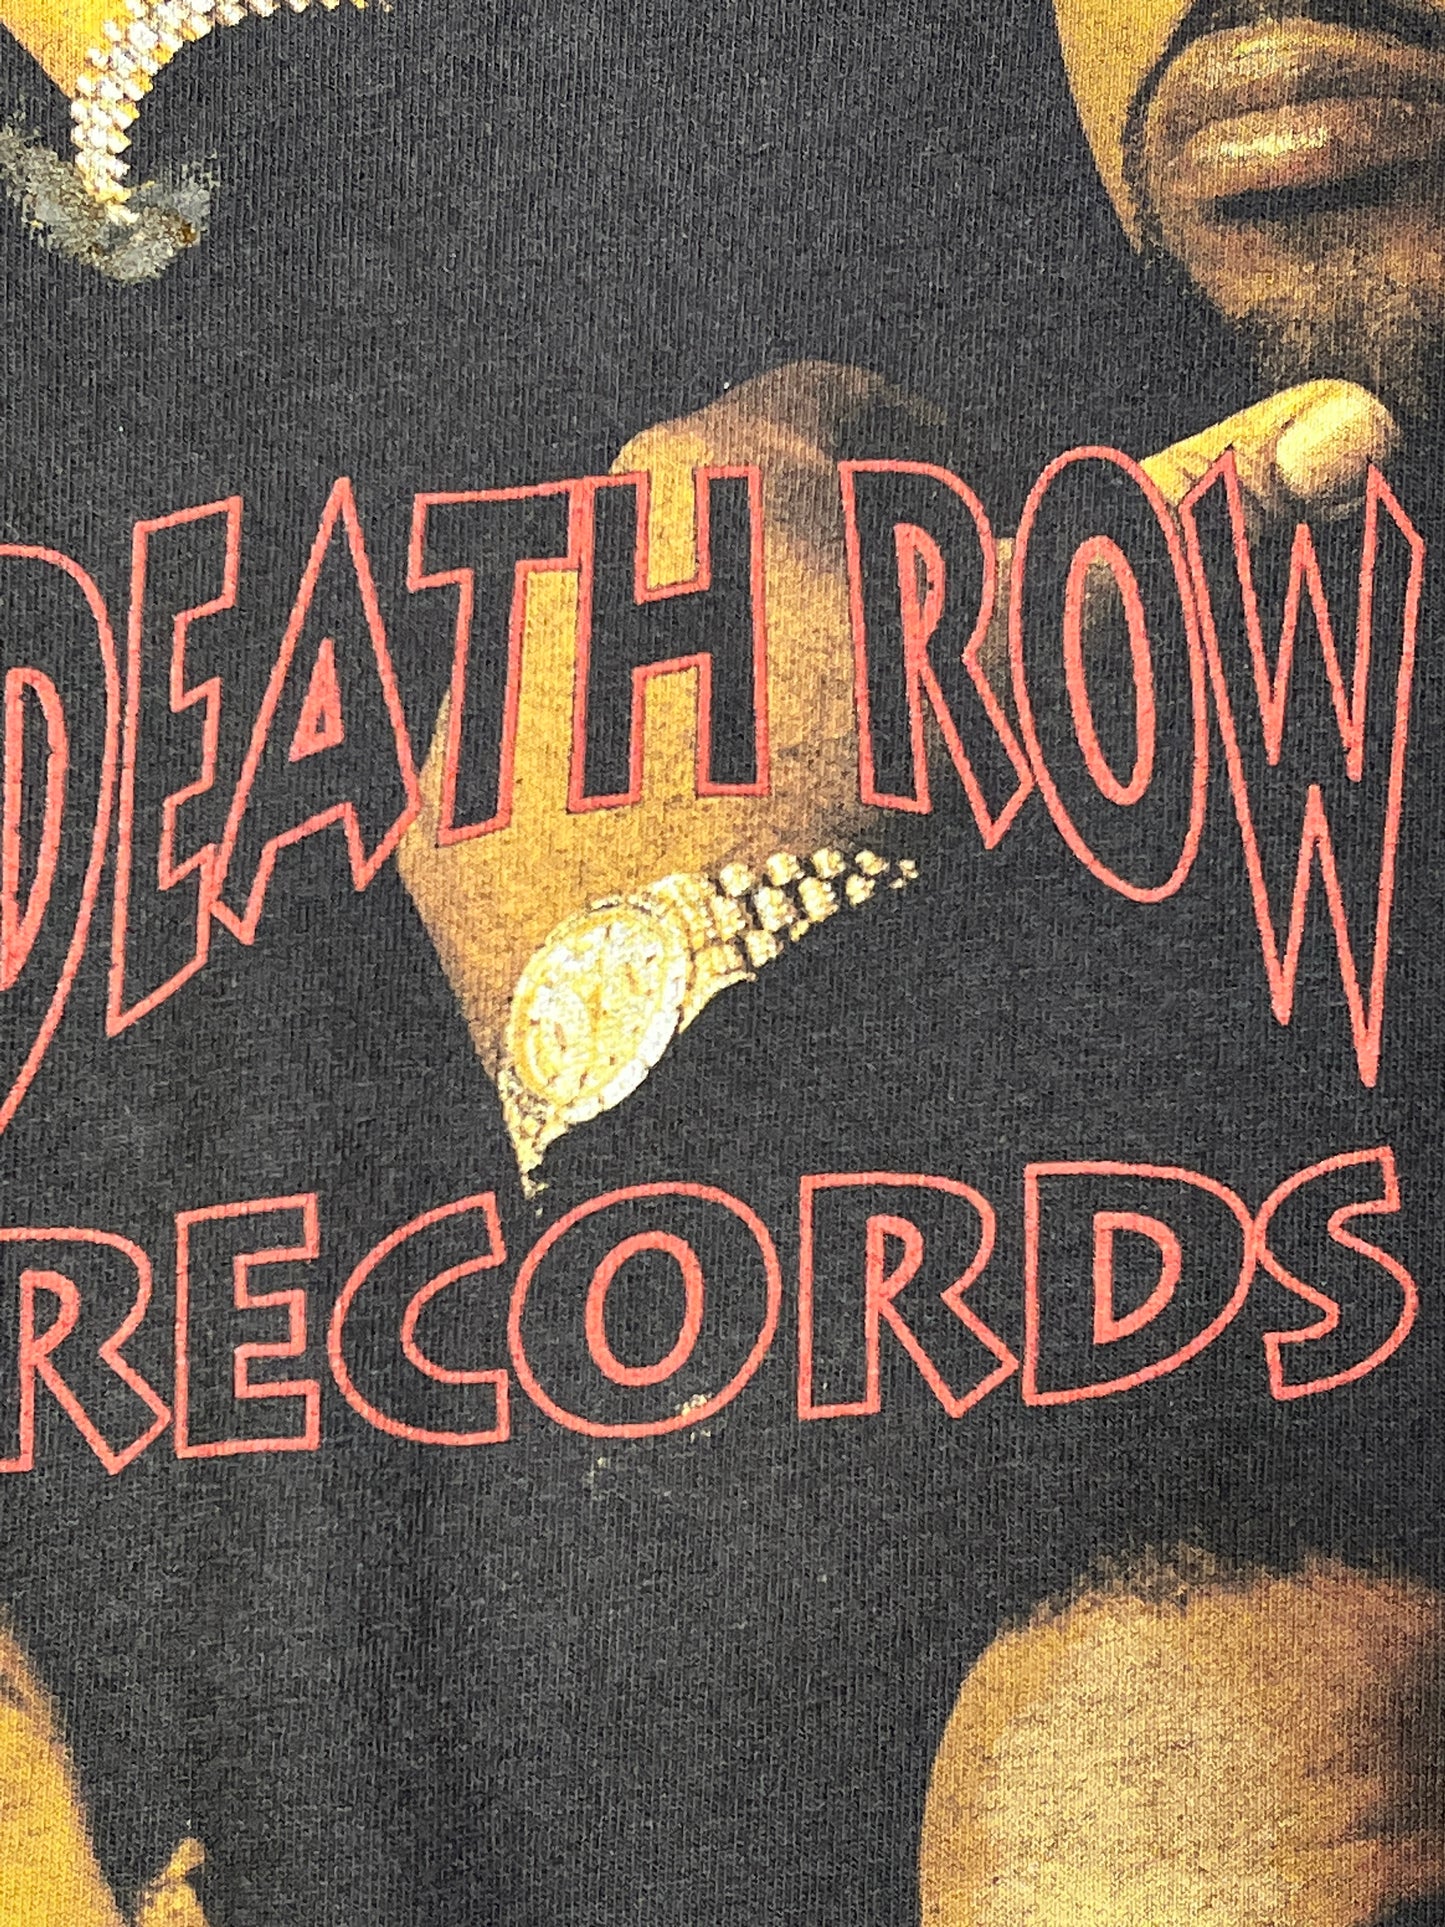 Vintage Death Row Records T-Shirt 2PAC SUGE SNOOP DRE